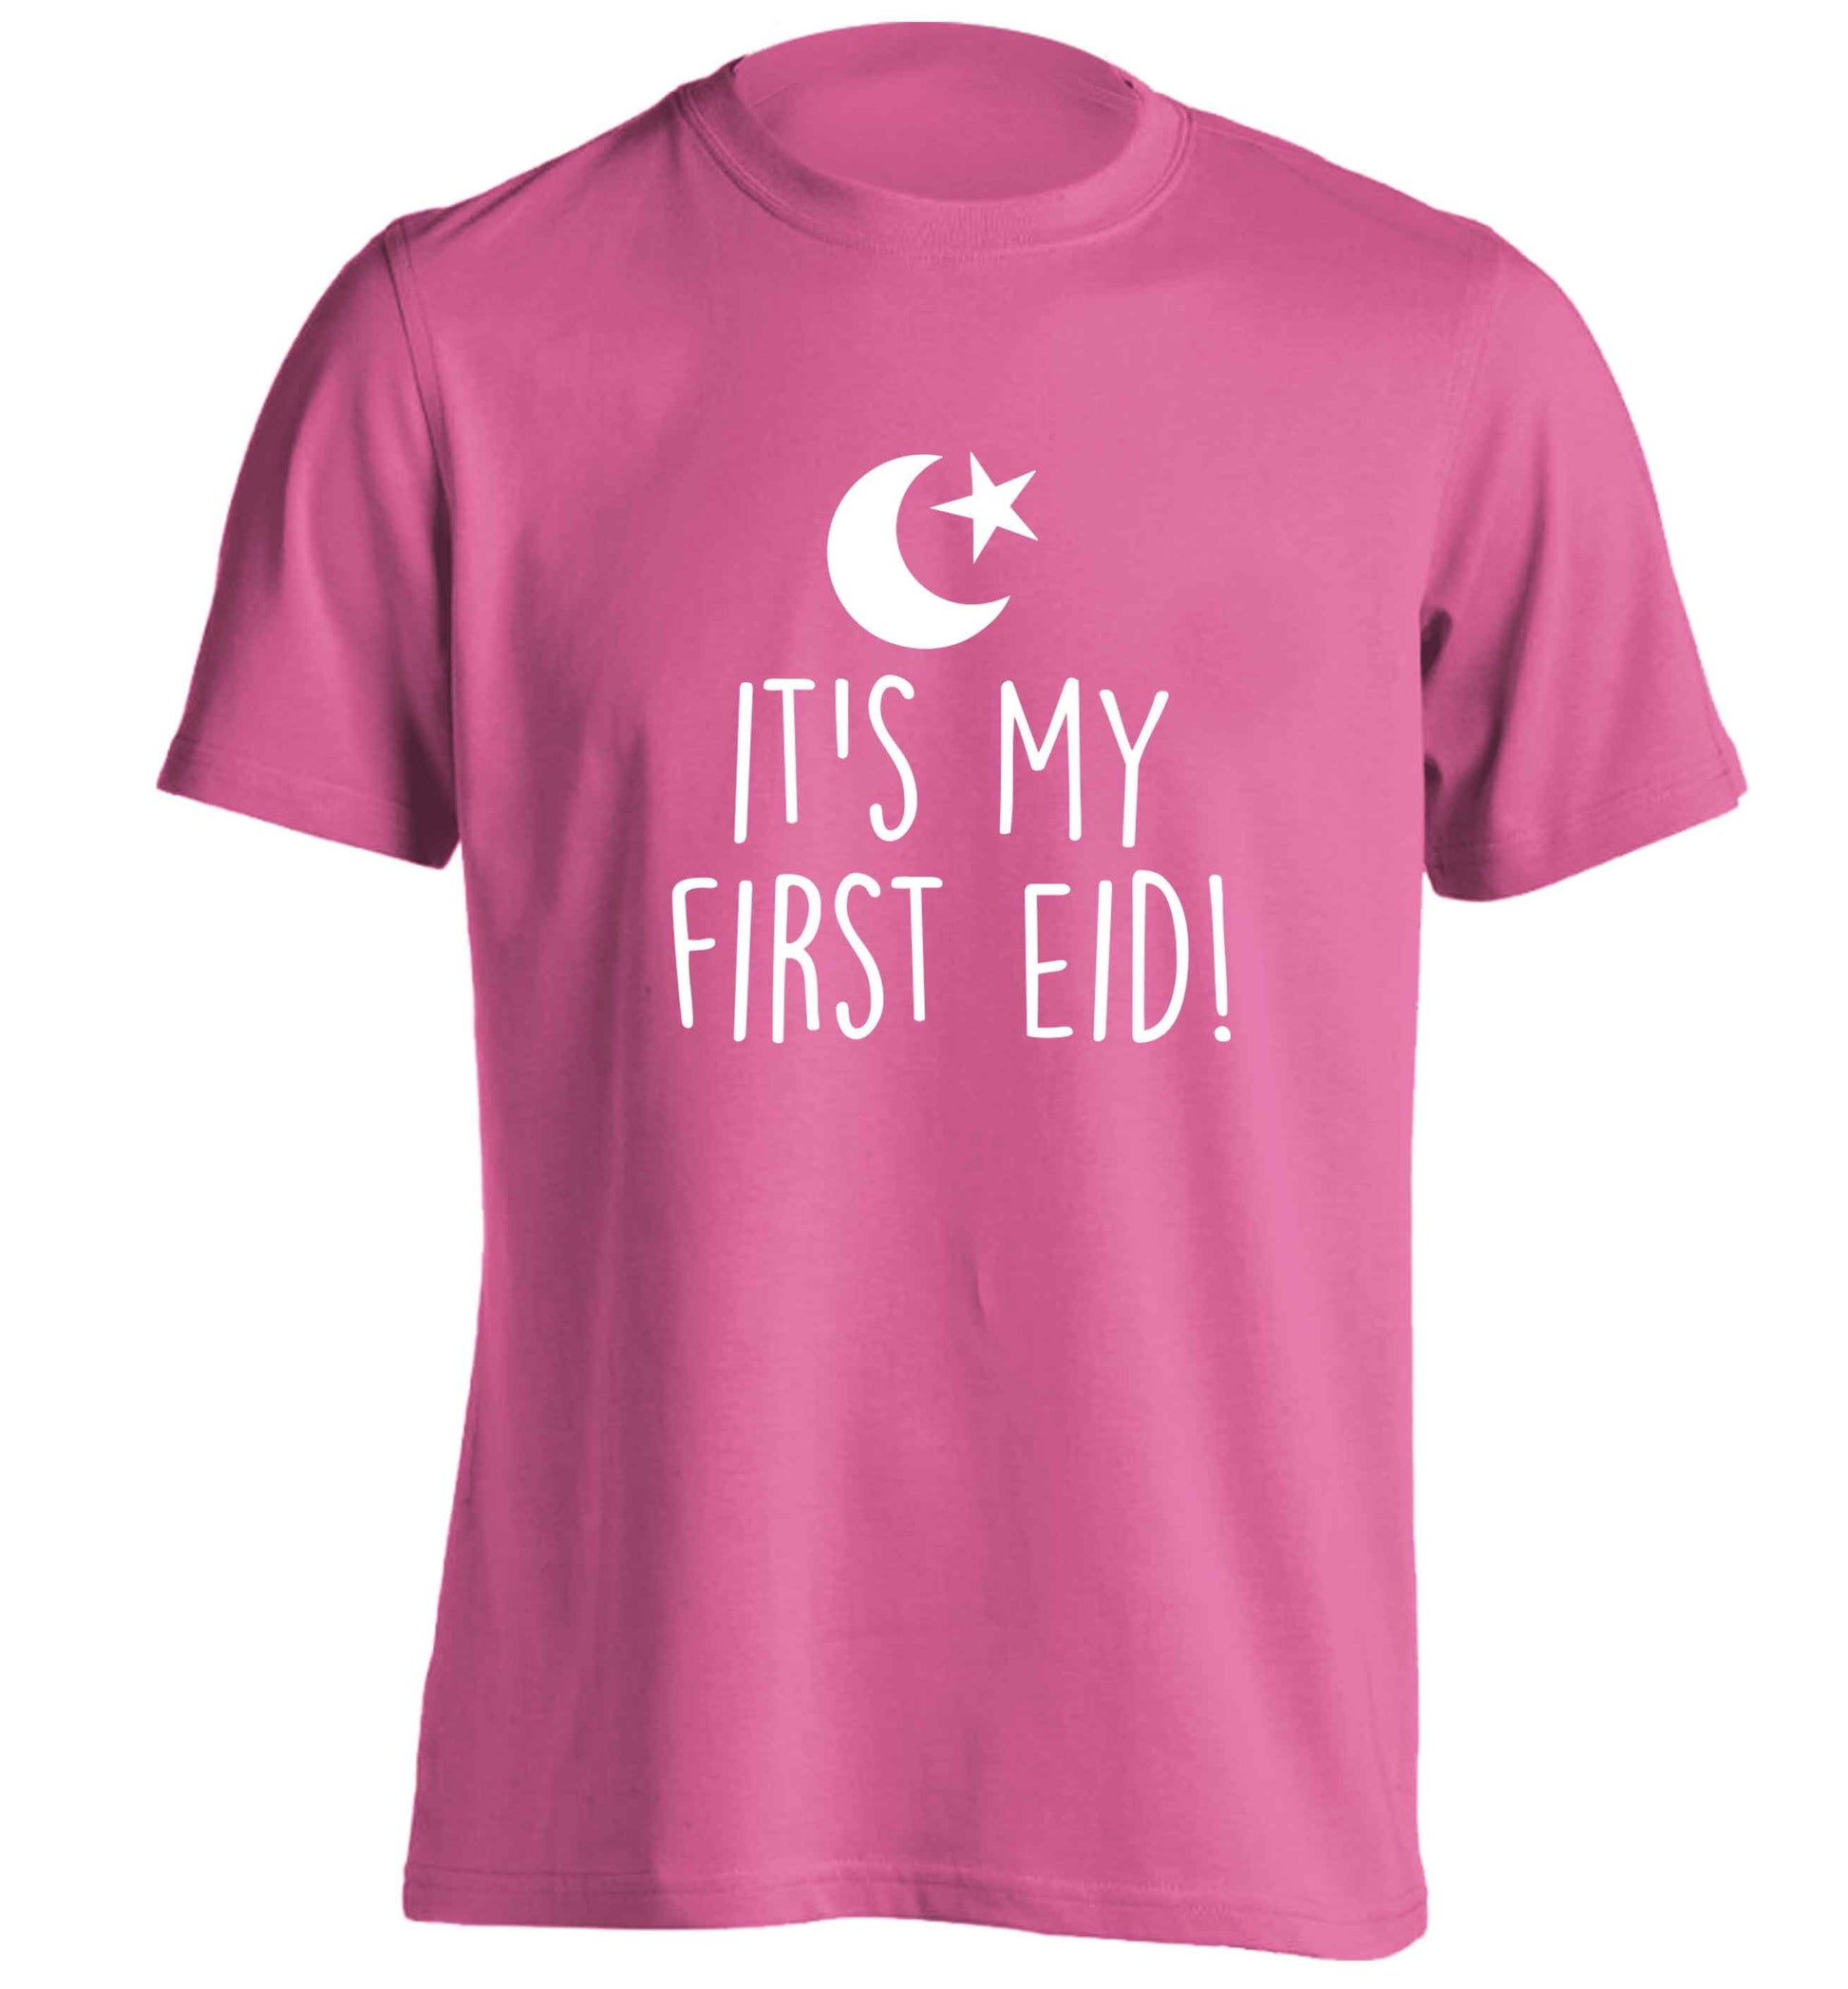 It's my first Eid adults unisex pink Tshirt 2XL